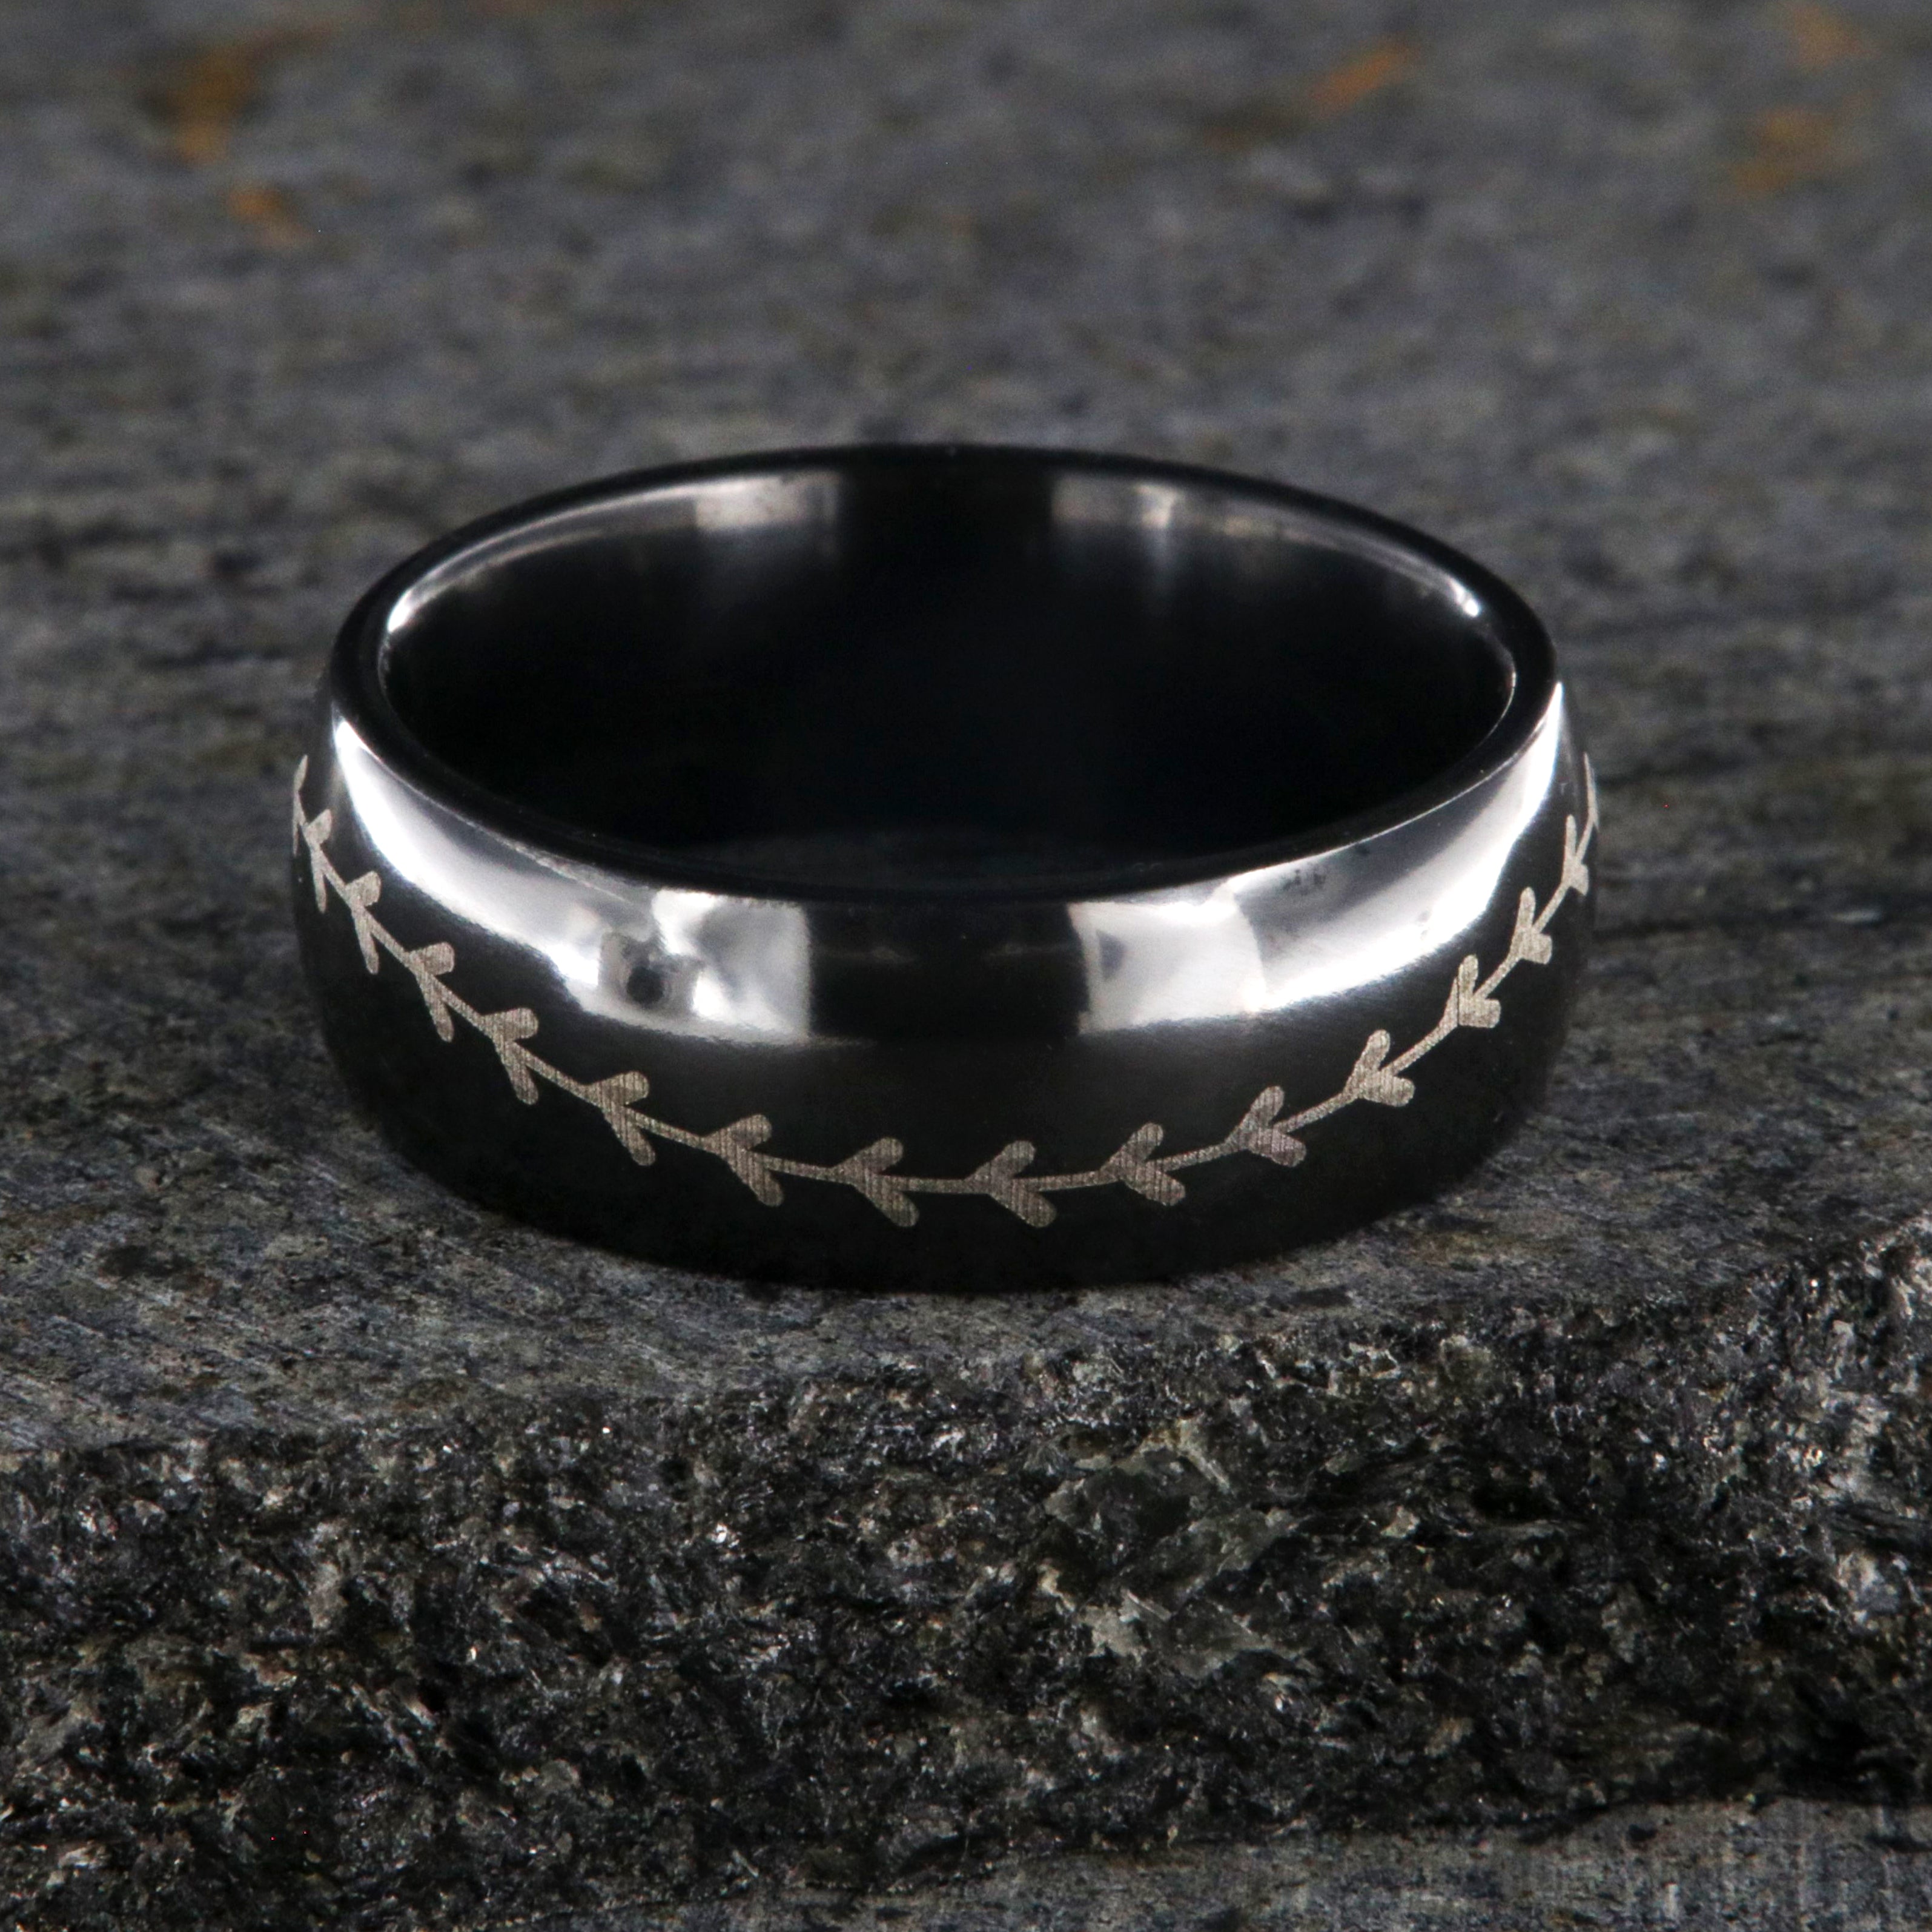 Black Zirconium Baseball Stitch Men's Ring with Custom Color and Hardwood Sleeve